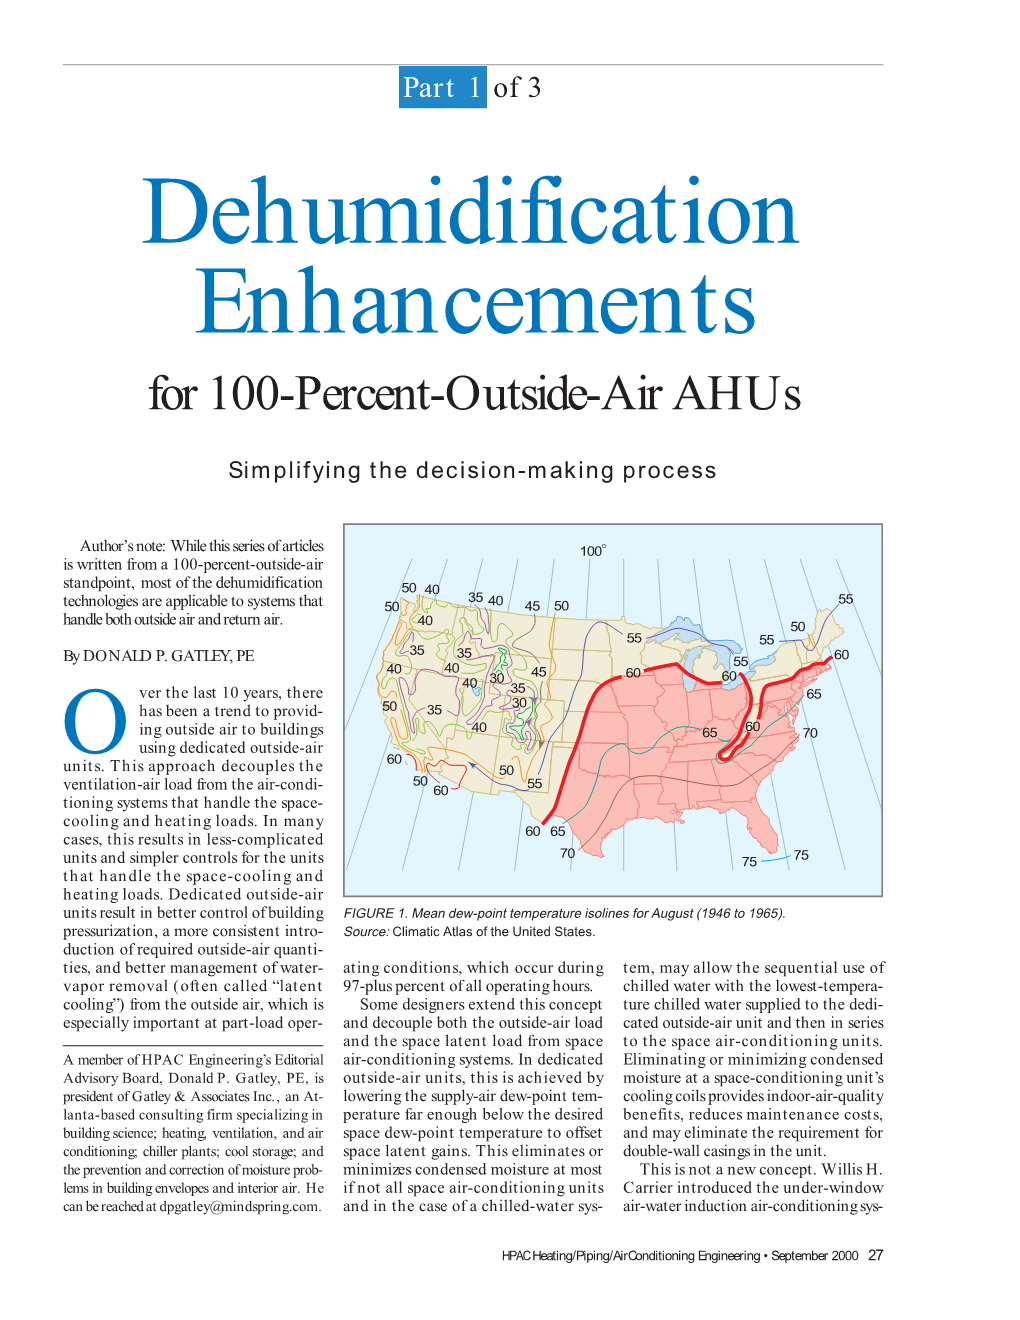 Dehumidification Enhancements for 100-Percent-Outside-Air Ahus